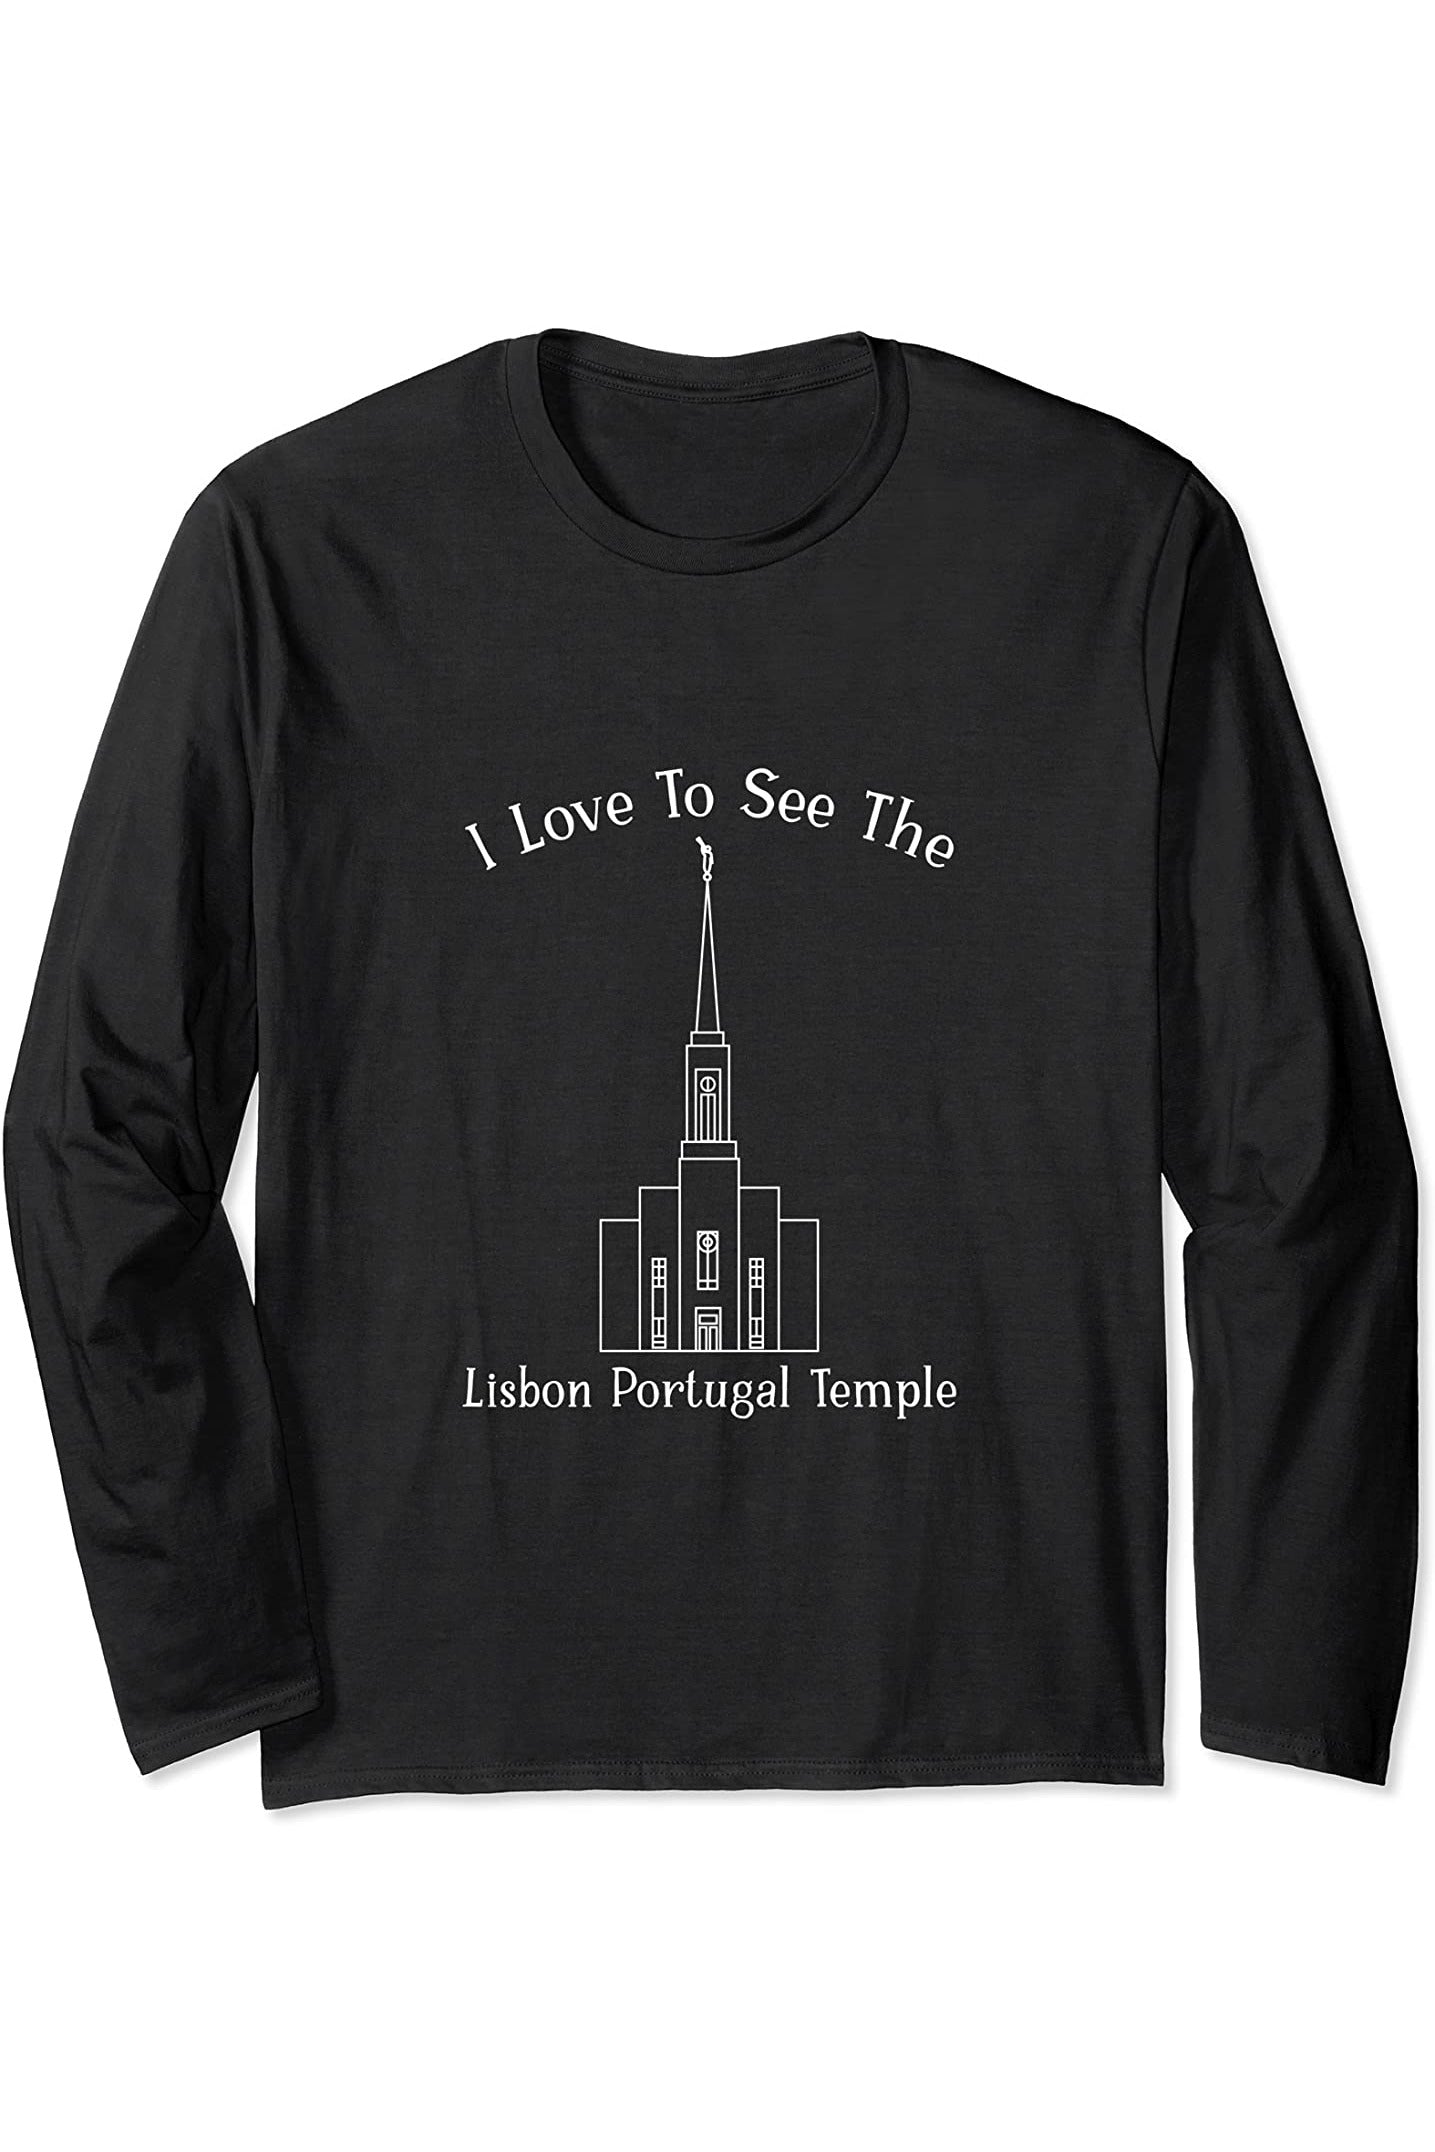 Lisbon Portugal Temple Long Sleeve T-Shirt - Happy Style (English) US